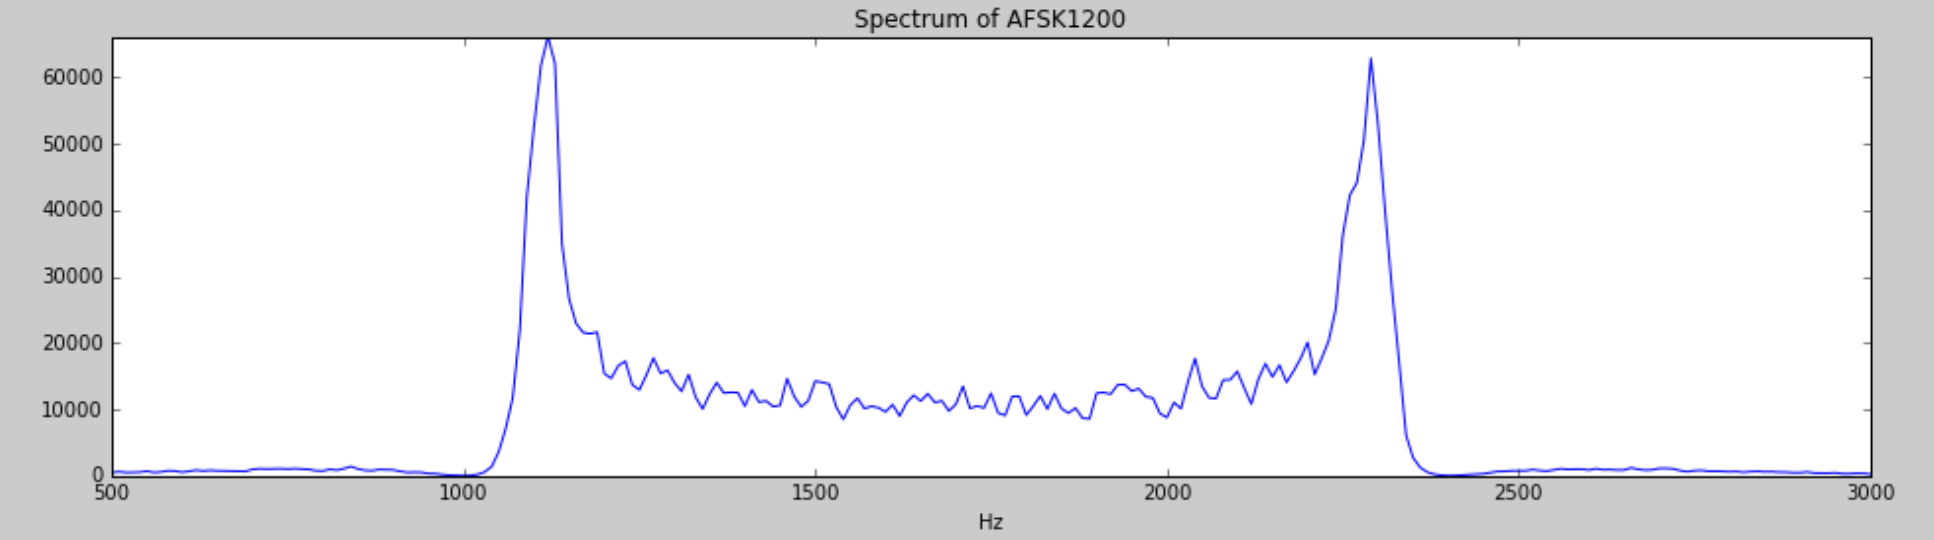 AFSK1200 Spectrum